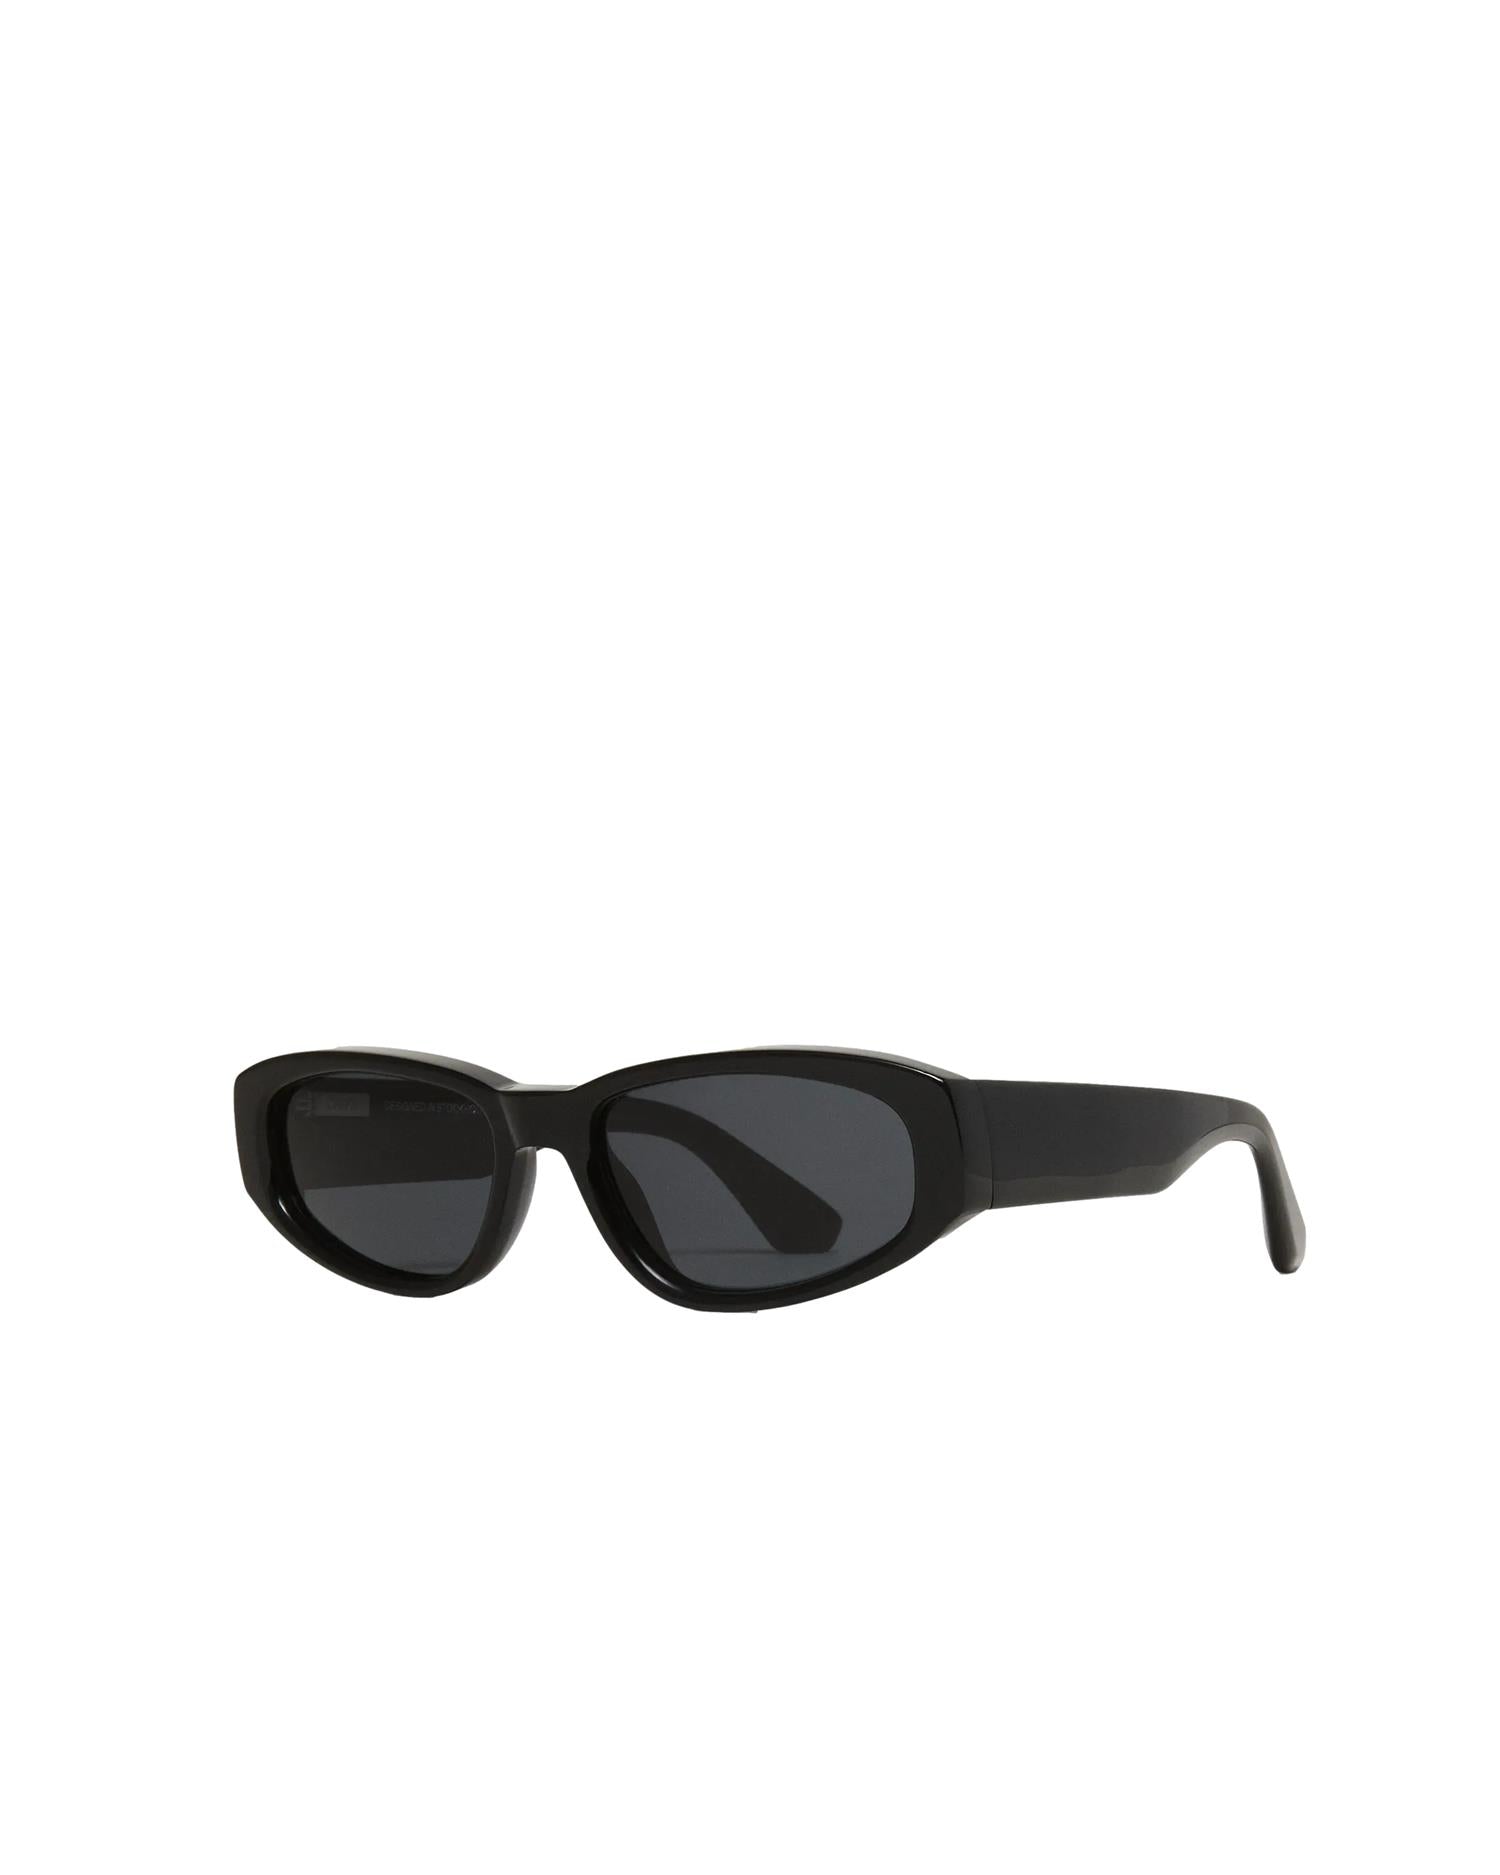 Chimi Eyewear 09 Black Solbriller Sort